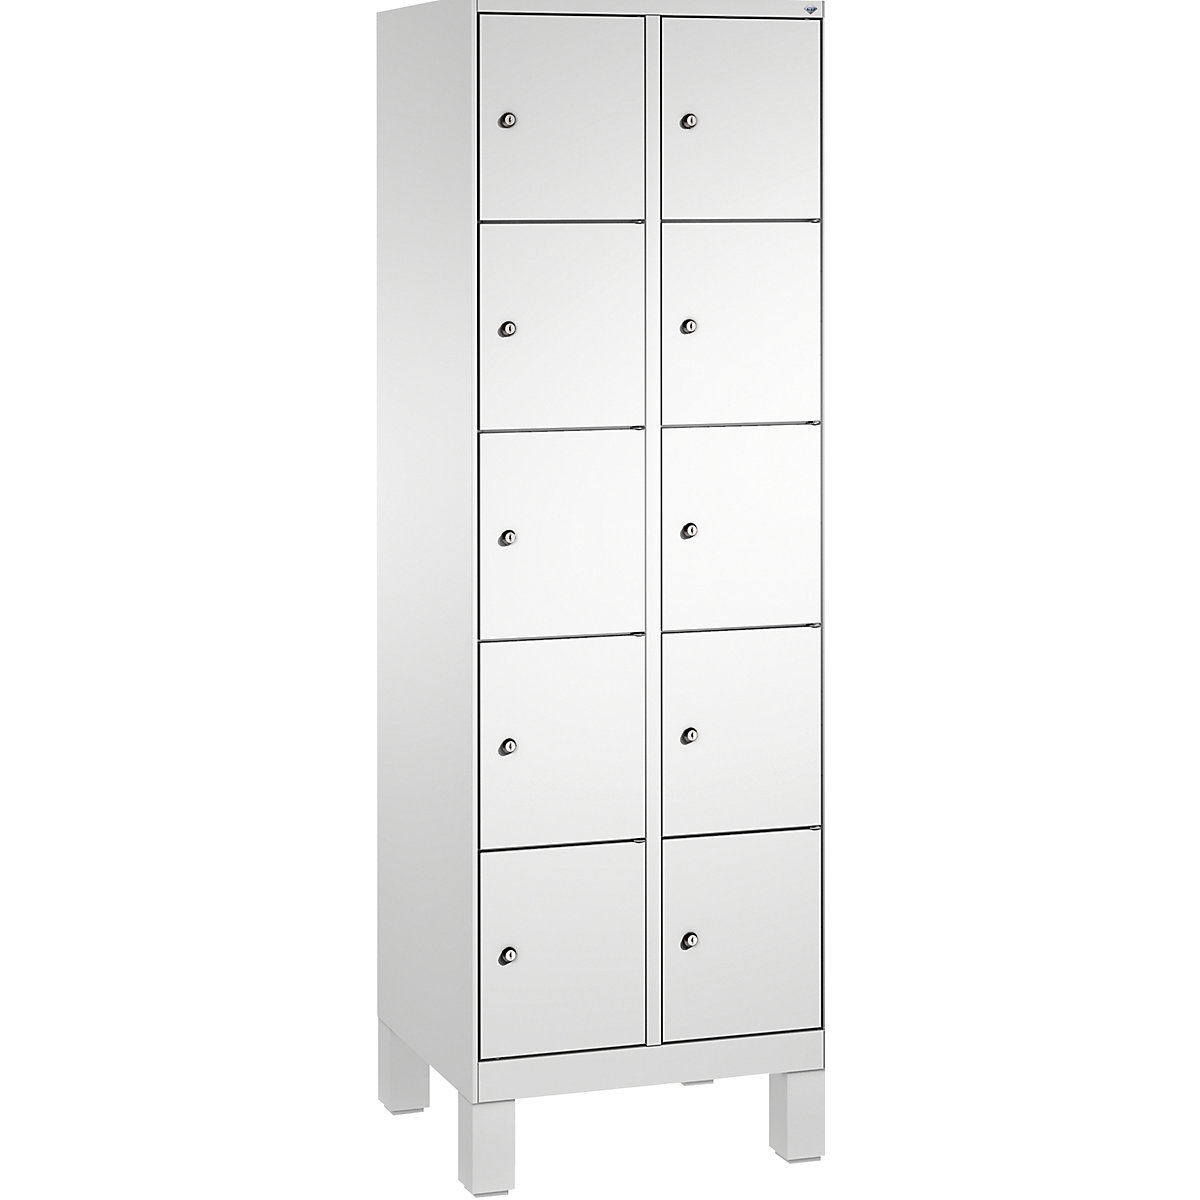 EVOLO locker unit, with feet – C+P, 2 compartments, 5 shelf compartments each, compartment width 300 mm, light grey-8